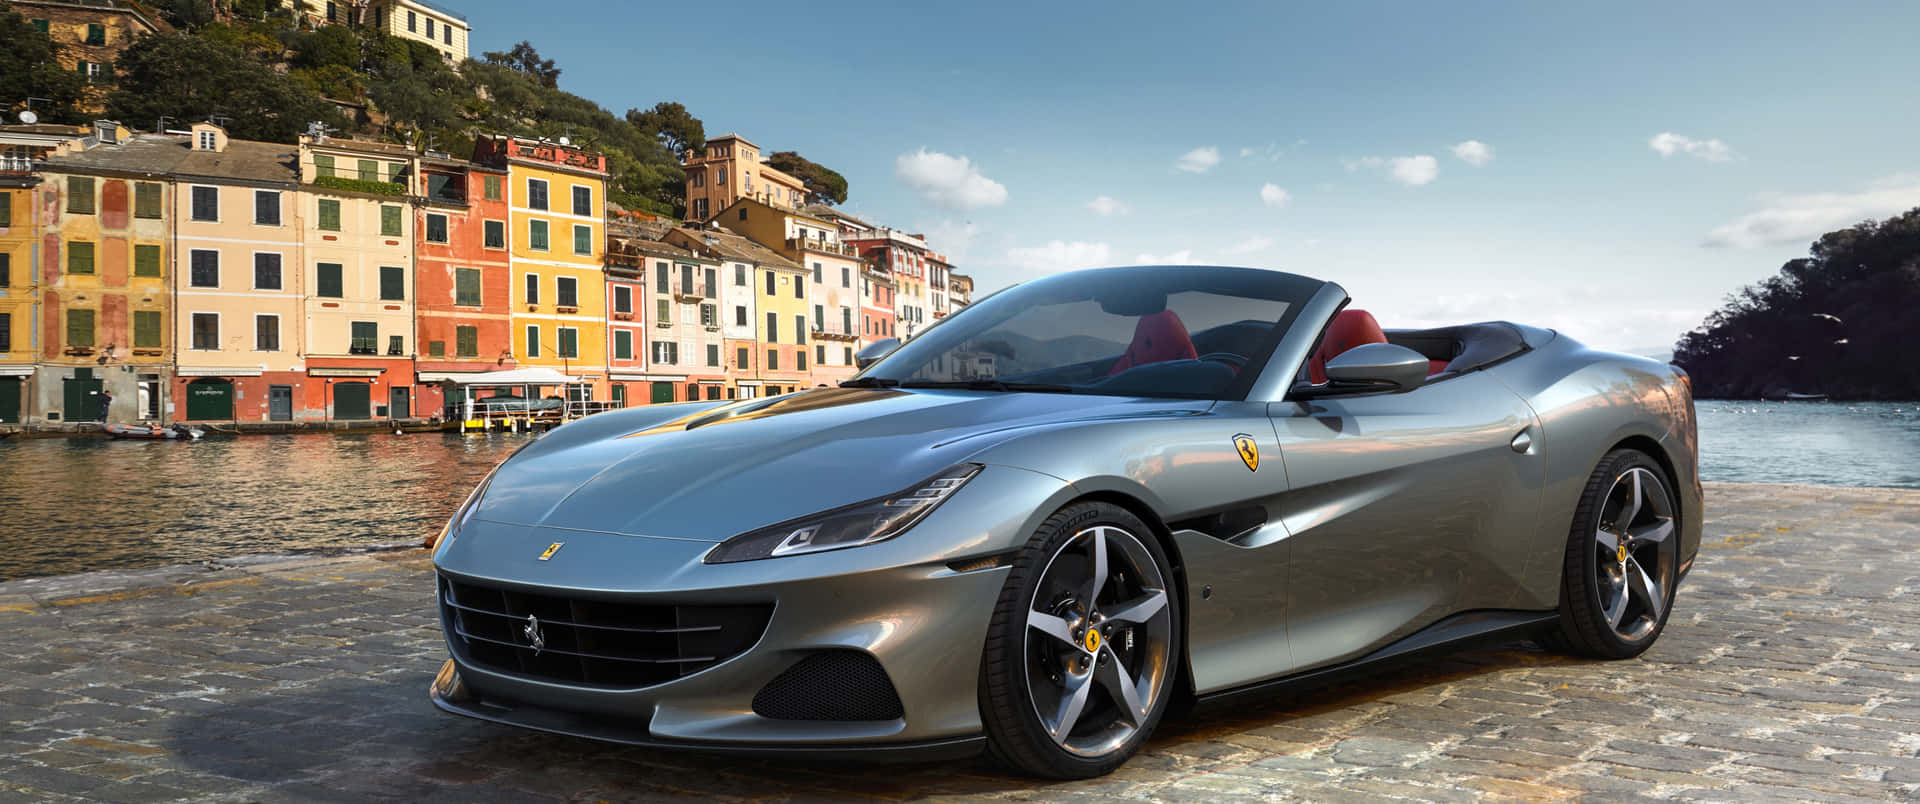 Stunning Ferrari Portofino in Motion Wallpaper